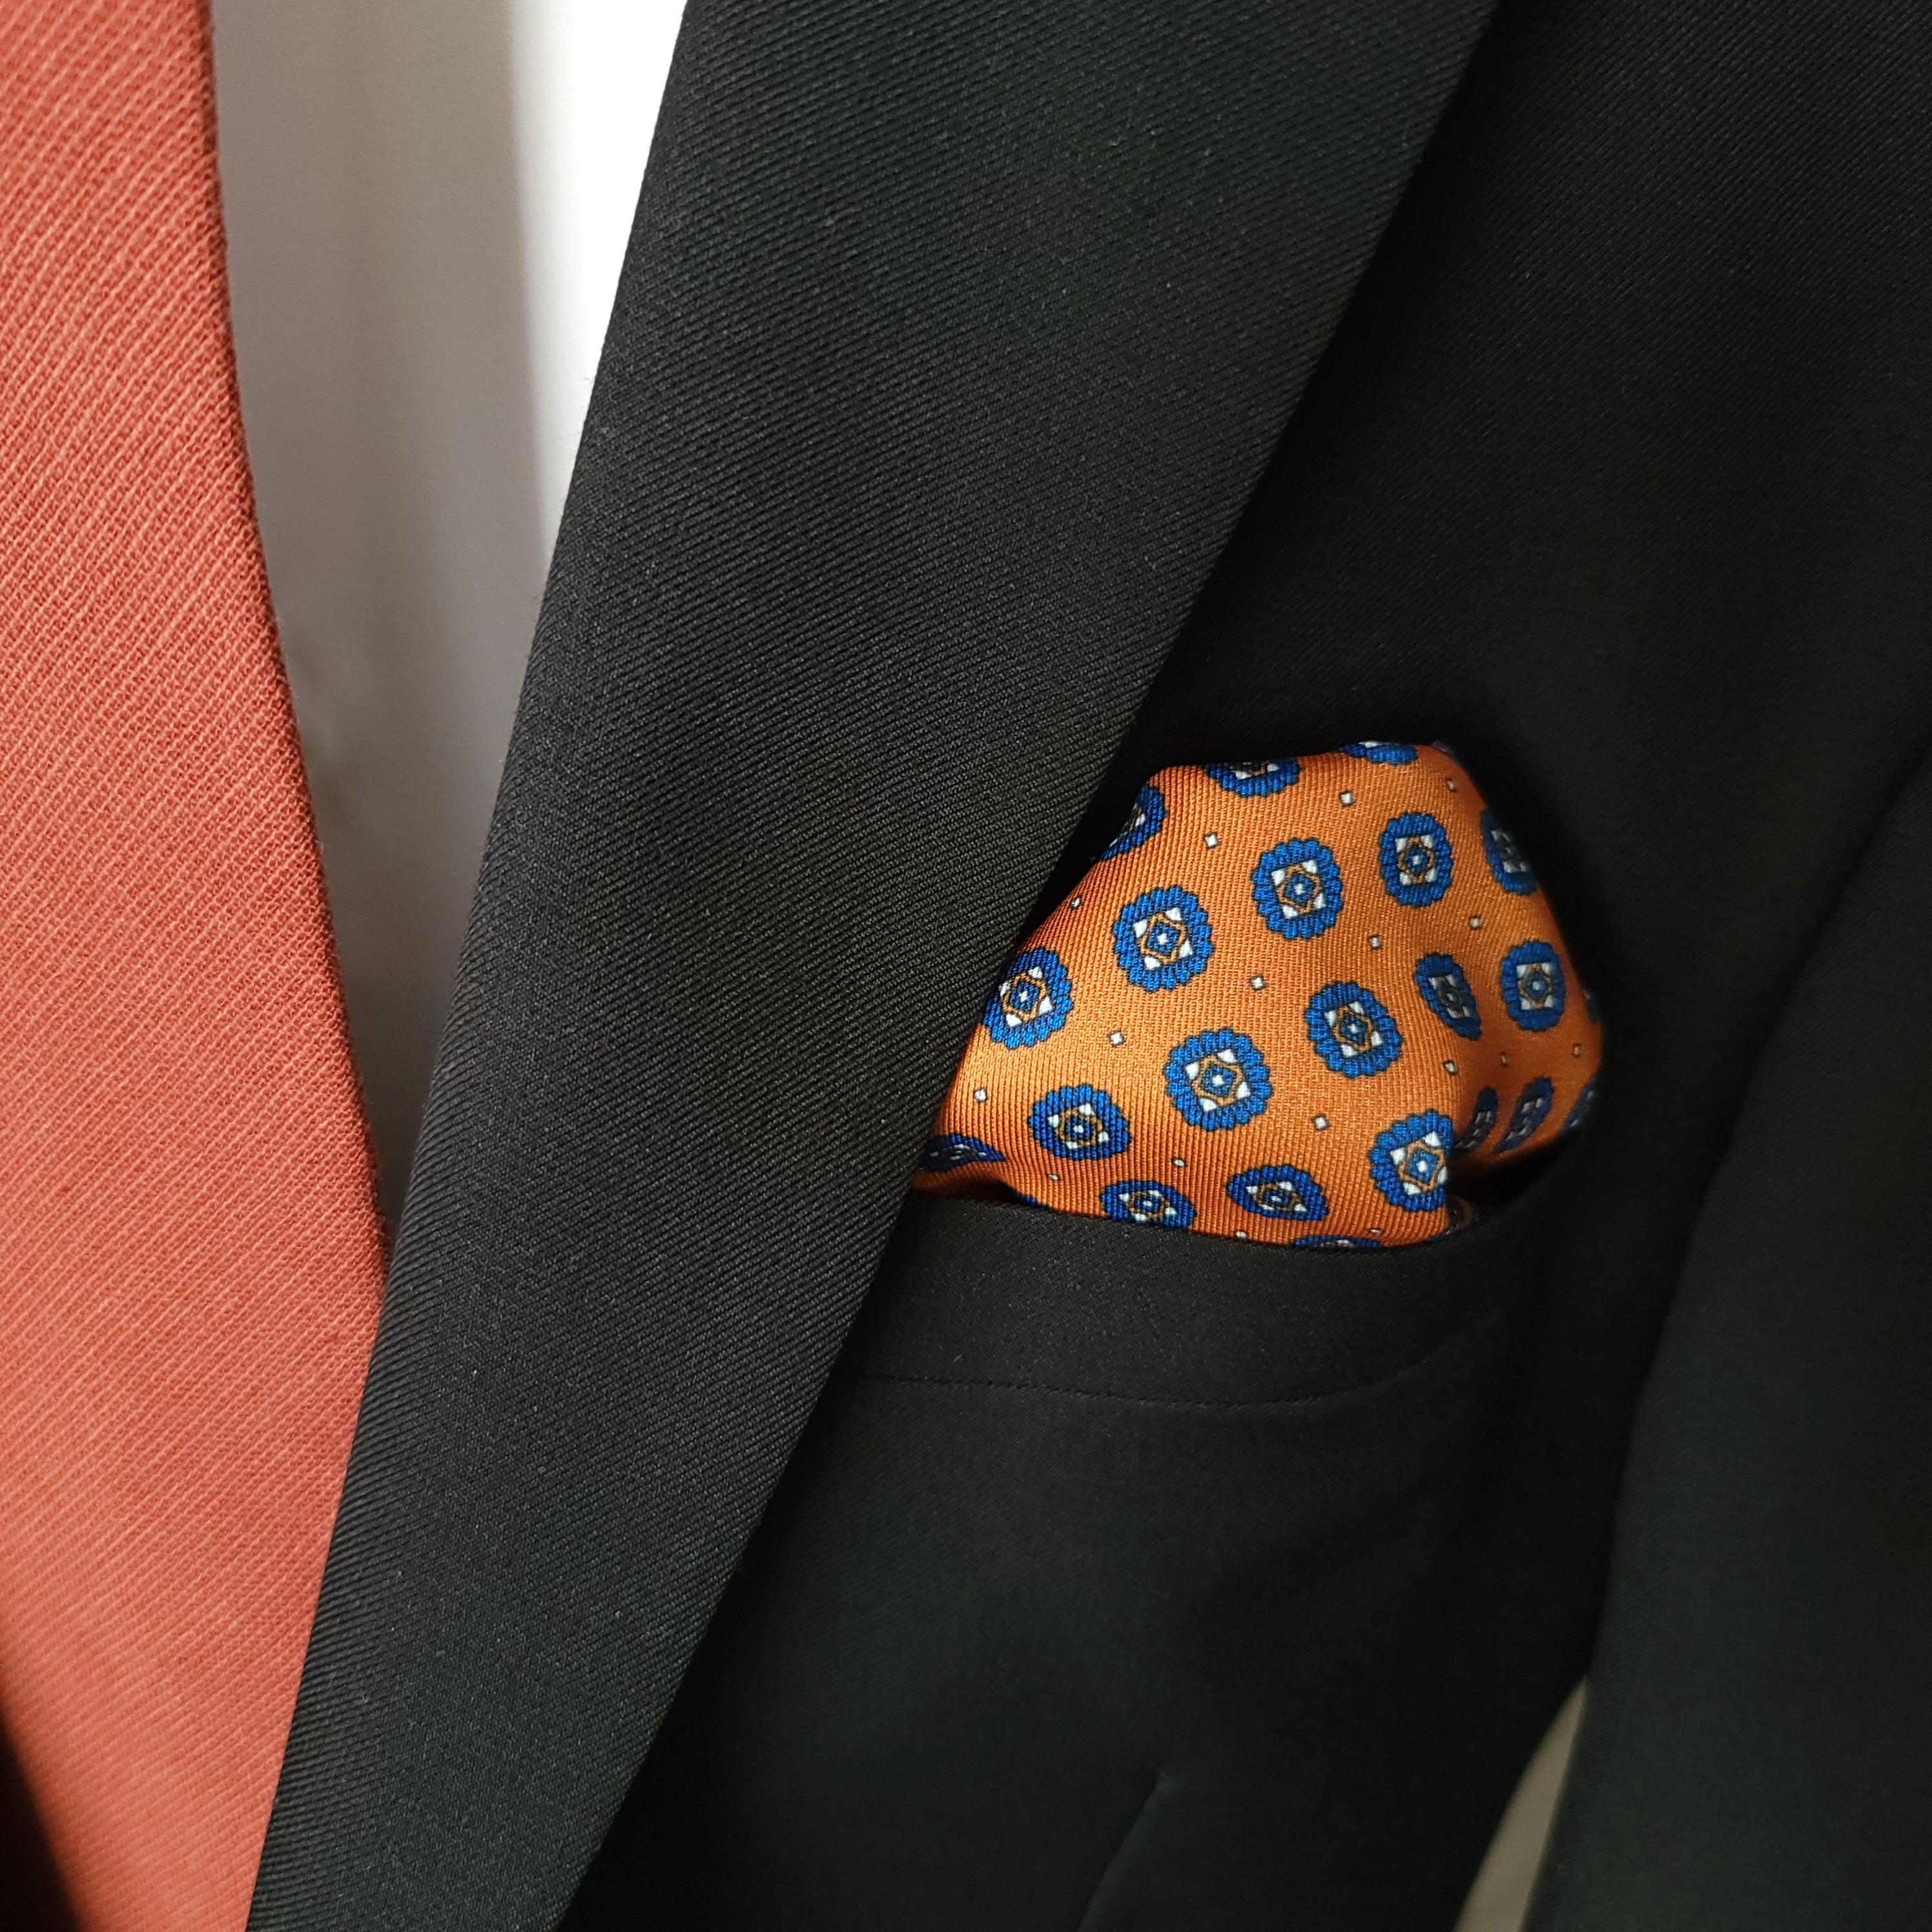 Royal Blue Orange Dot Stylish and Elegant Silk Pocket Square - STYLETIE